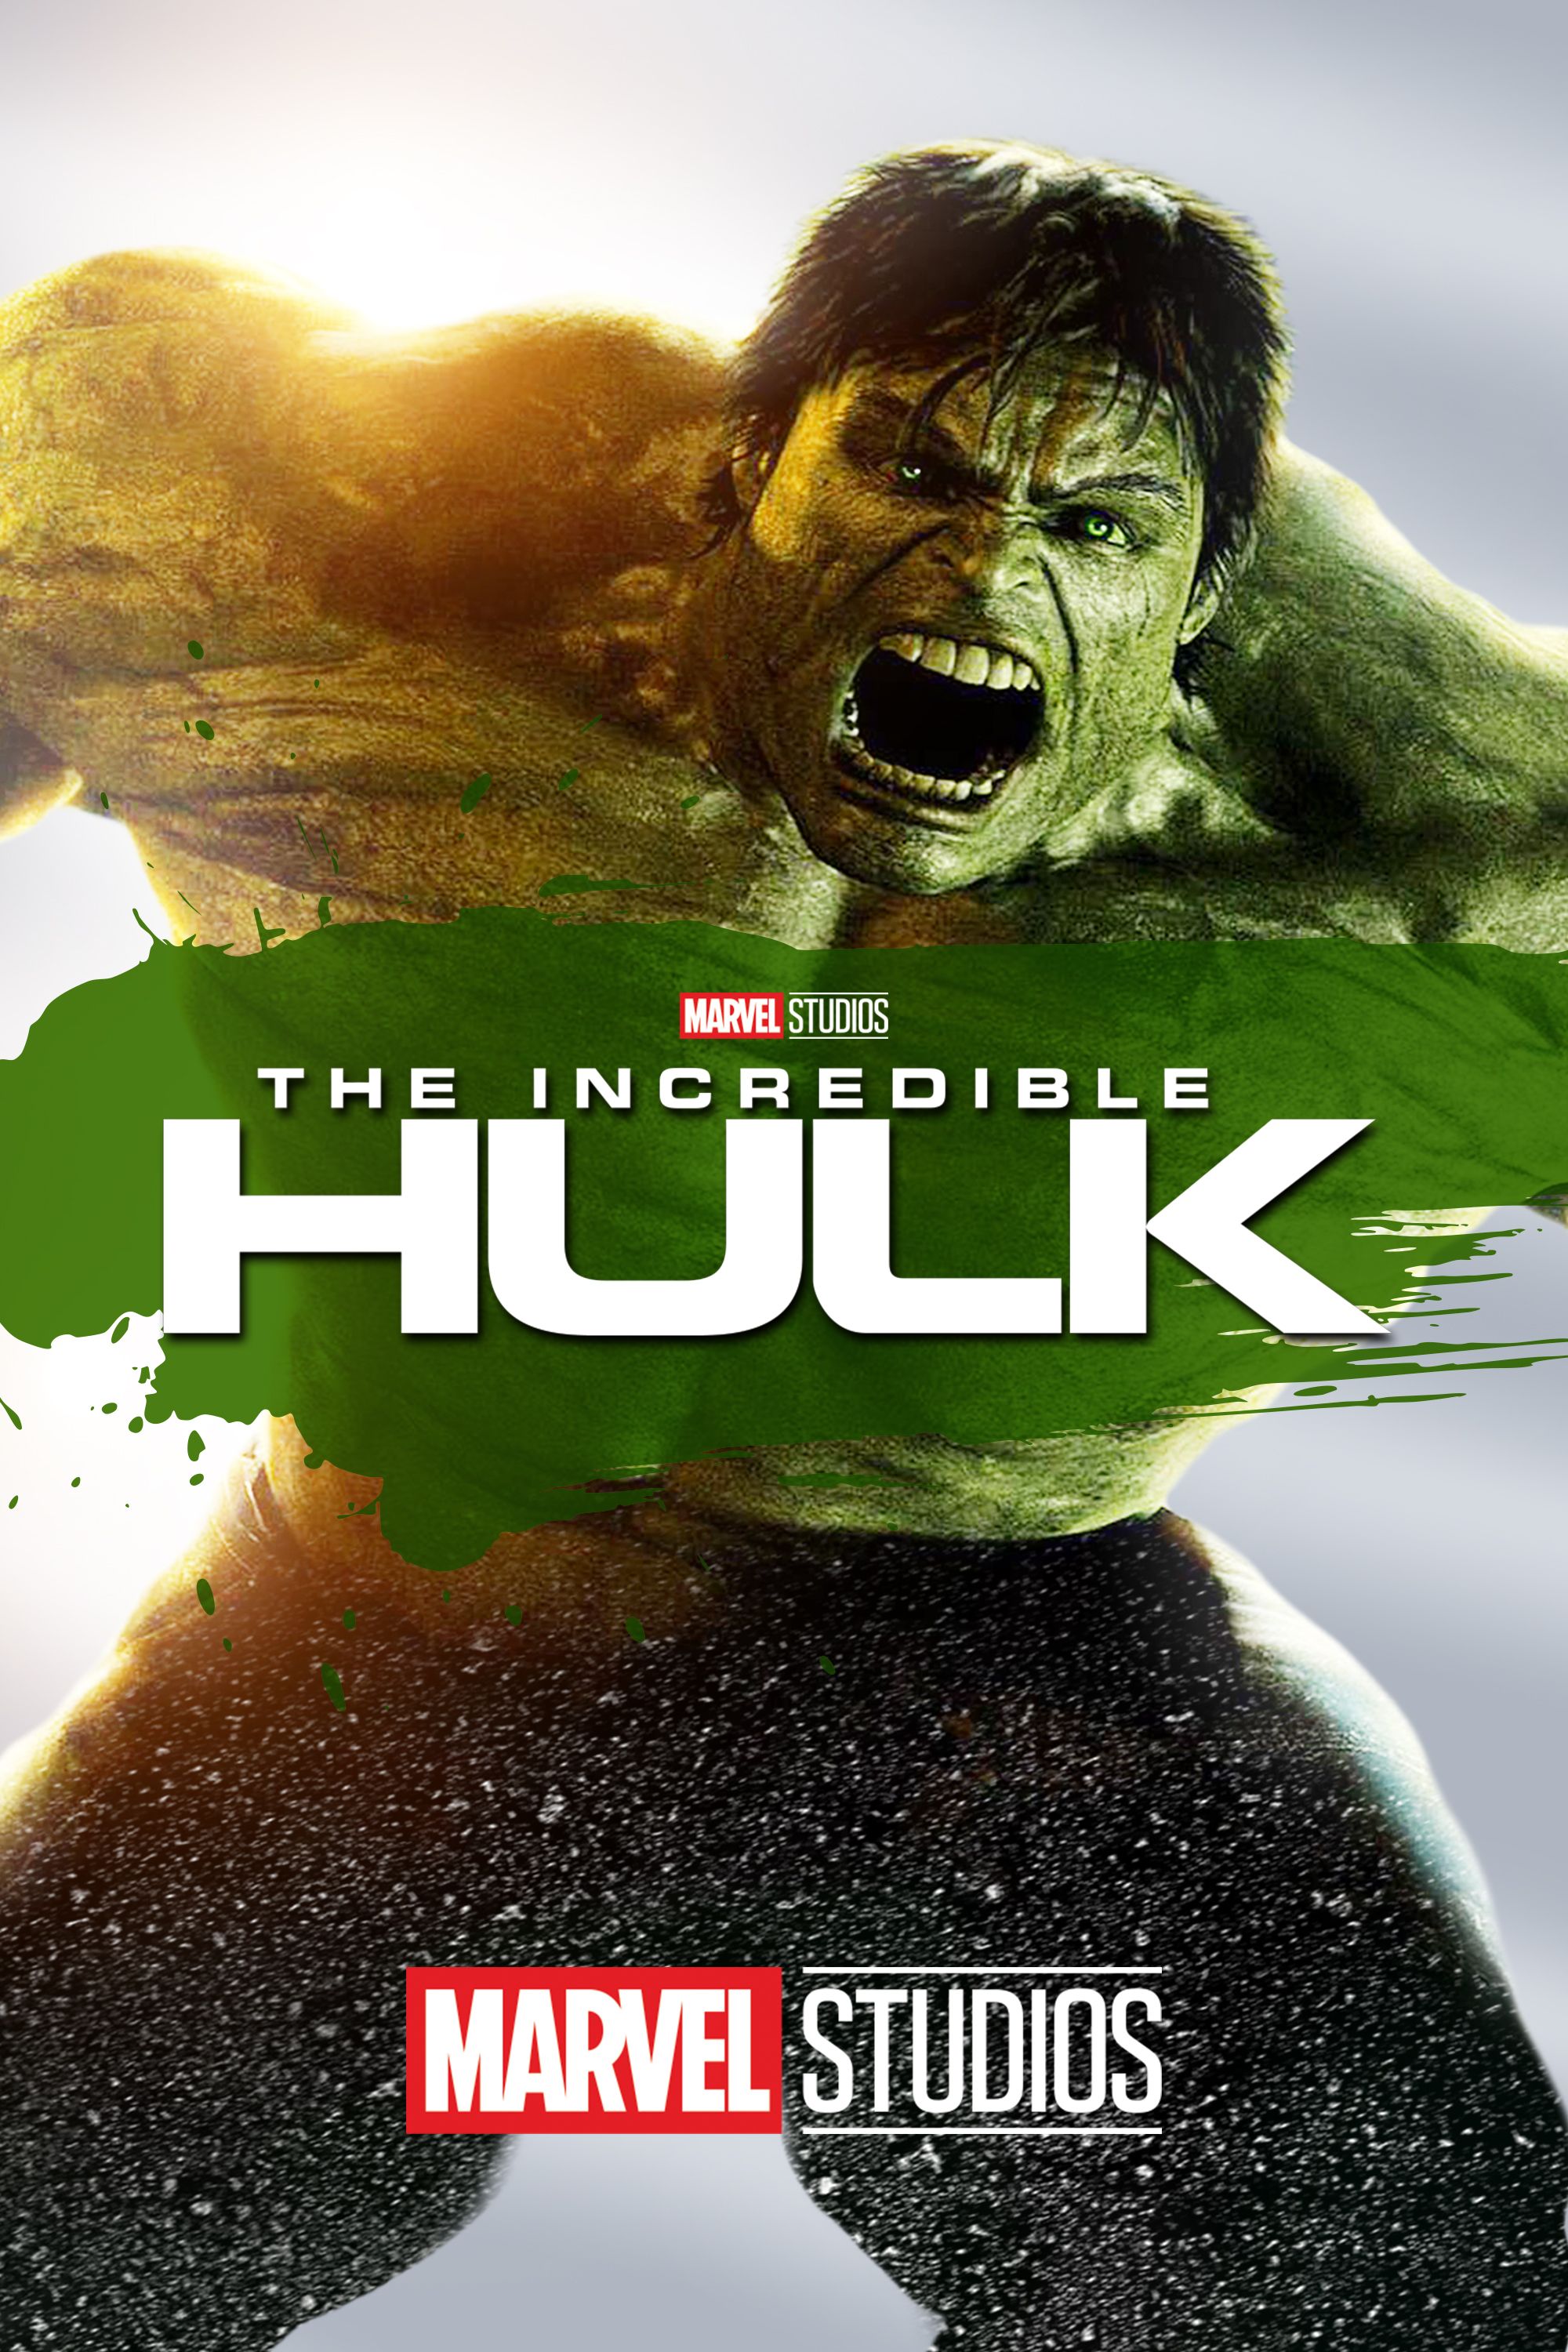 The incredible hulk full movie